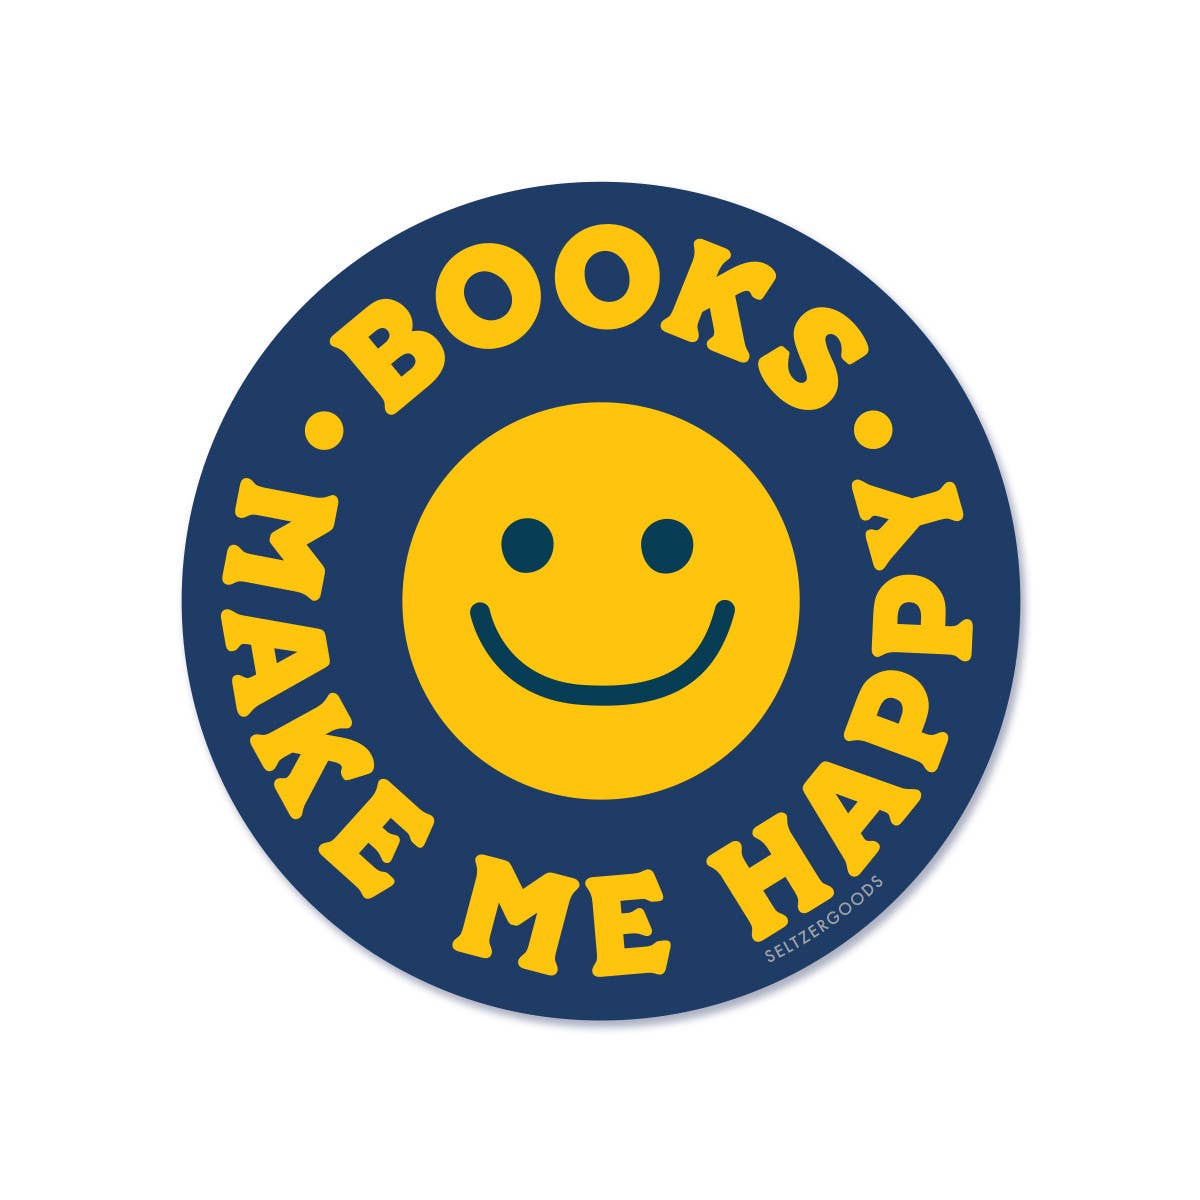 Sticker-Books-28: Books Make Me Happy